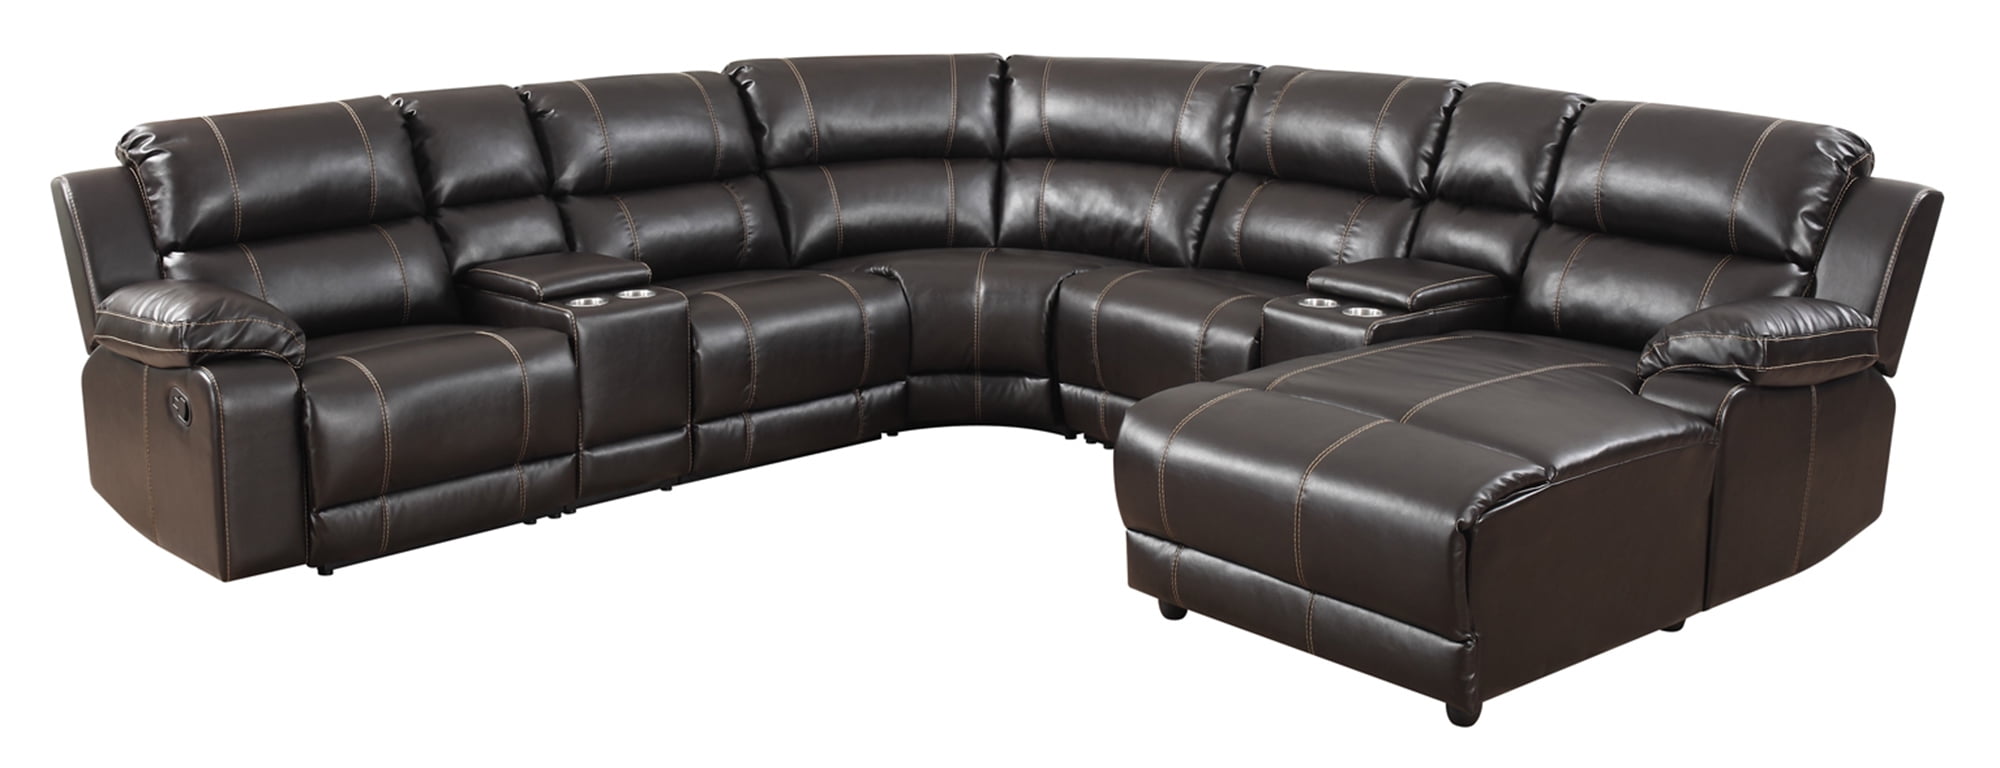 7pc luxury bonded leather reclining sectional sofa set